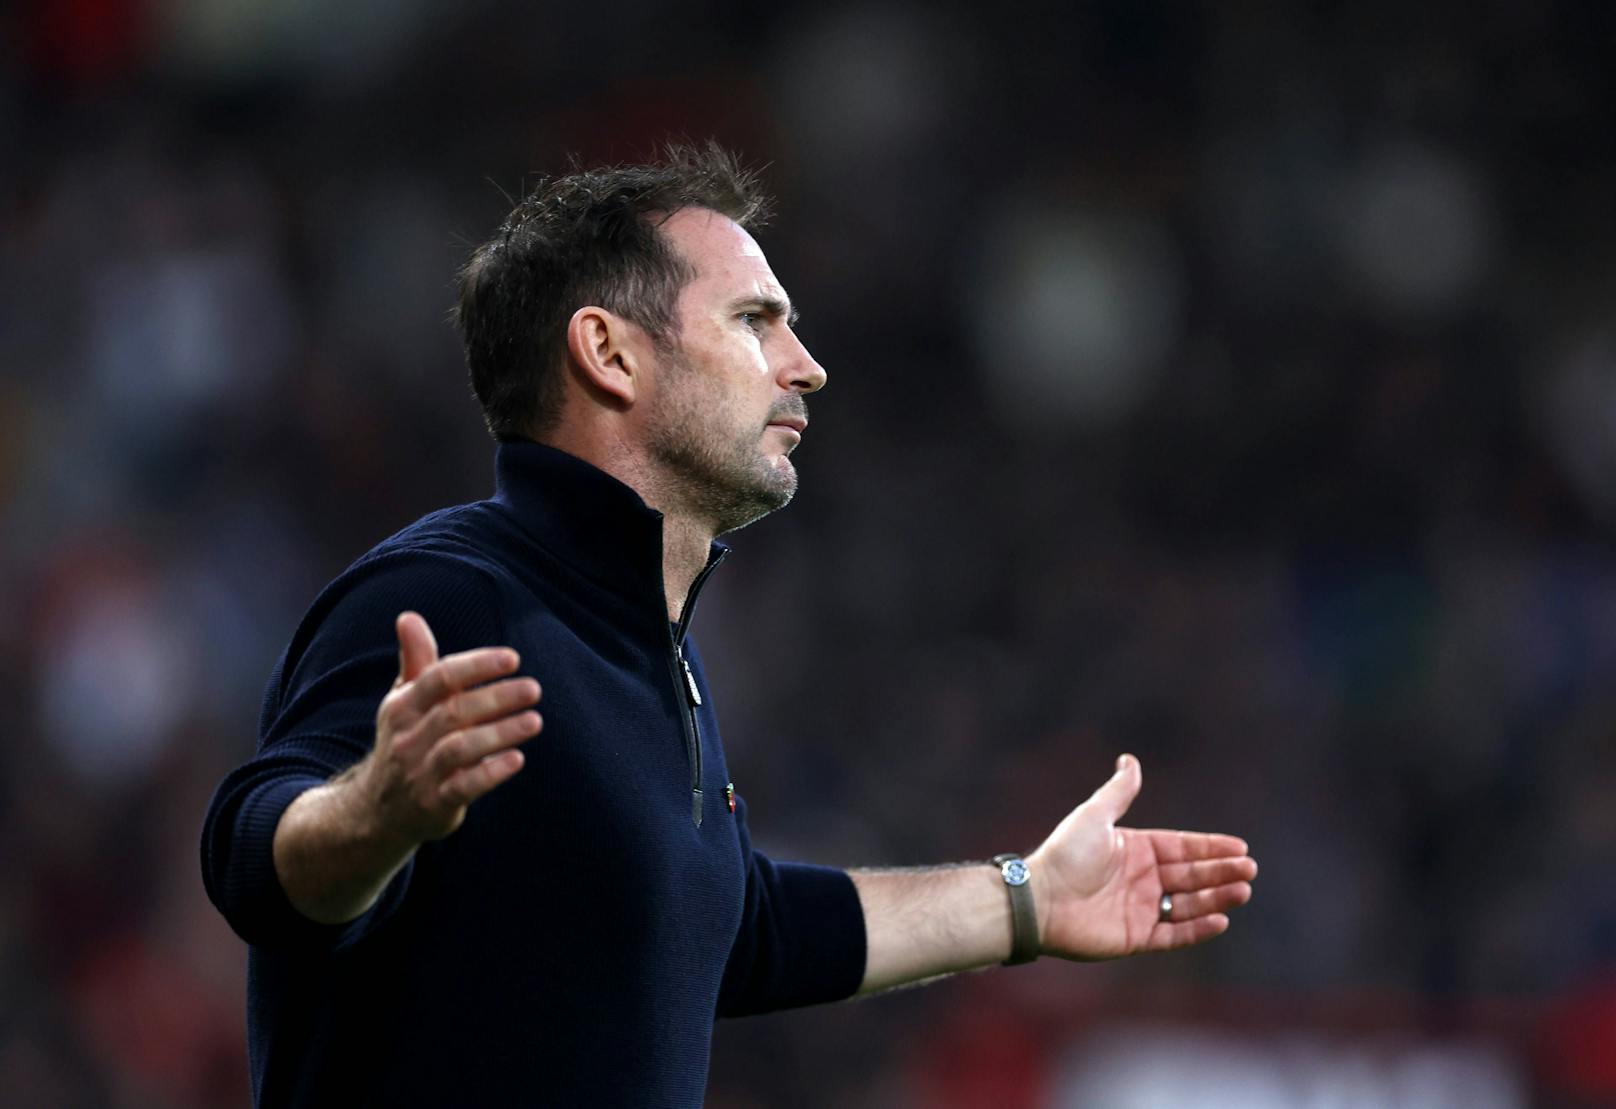 Rauswurf! England-Ikone Lampard verliert Trainerjob